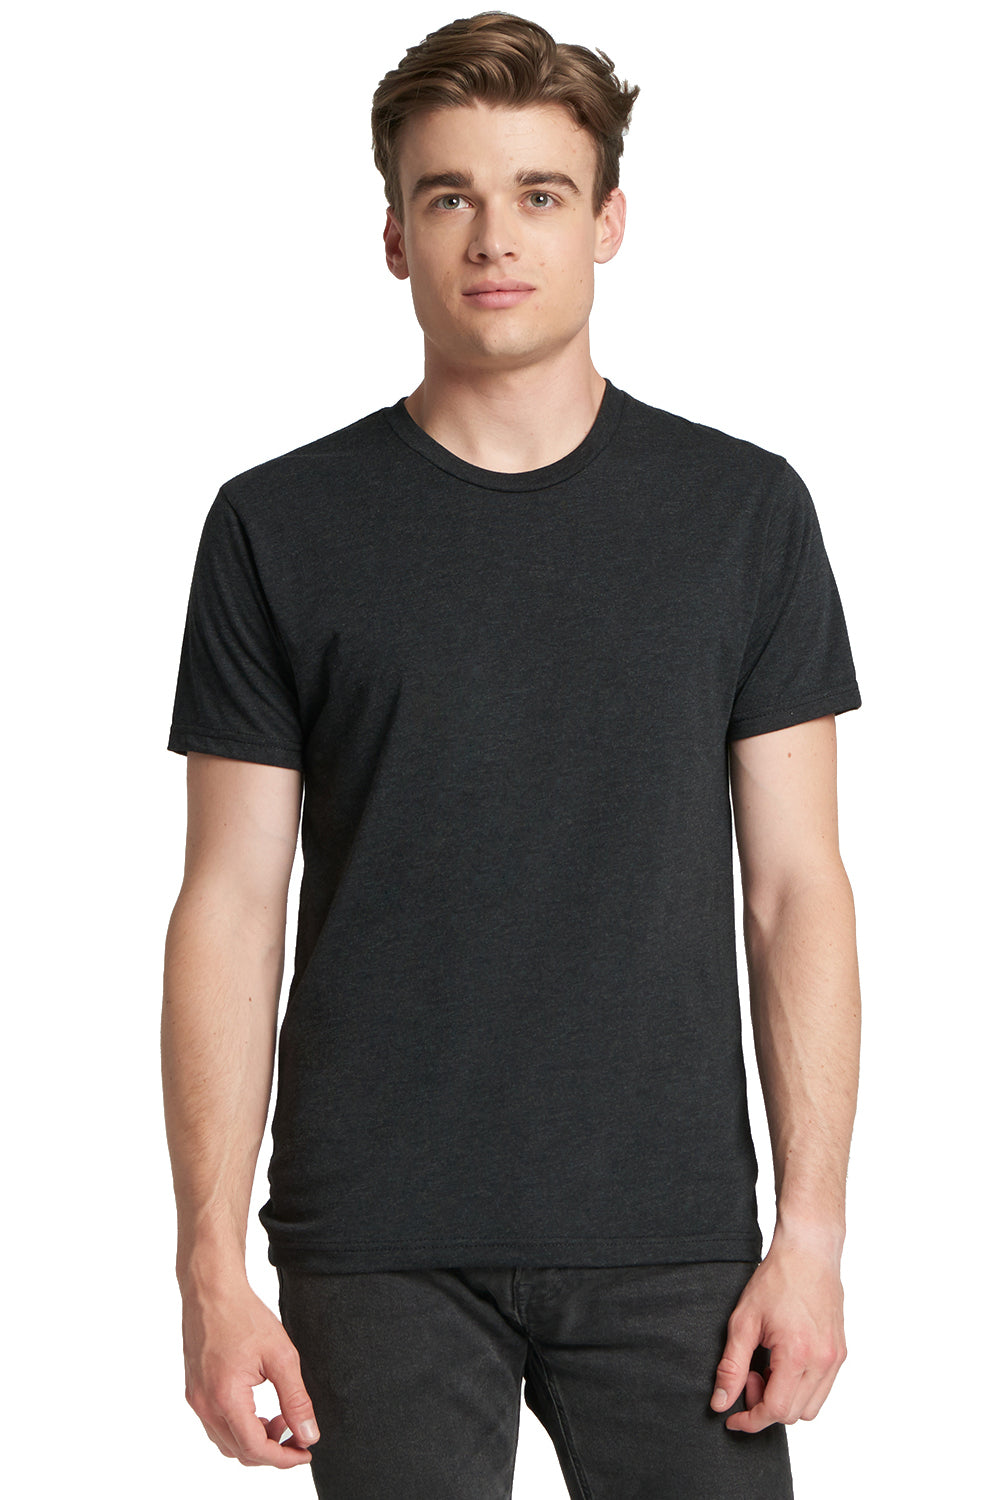 Next Level 6010 Mens Jersey Short Sleeve Crewneck T-Shirt Black Front